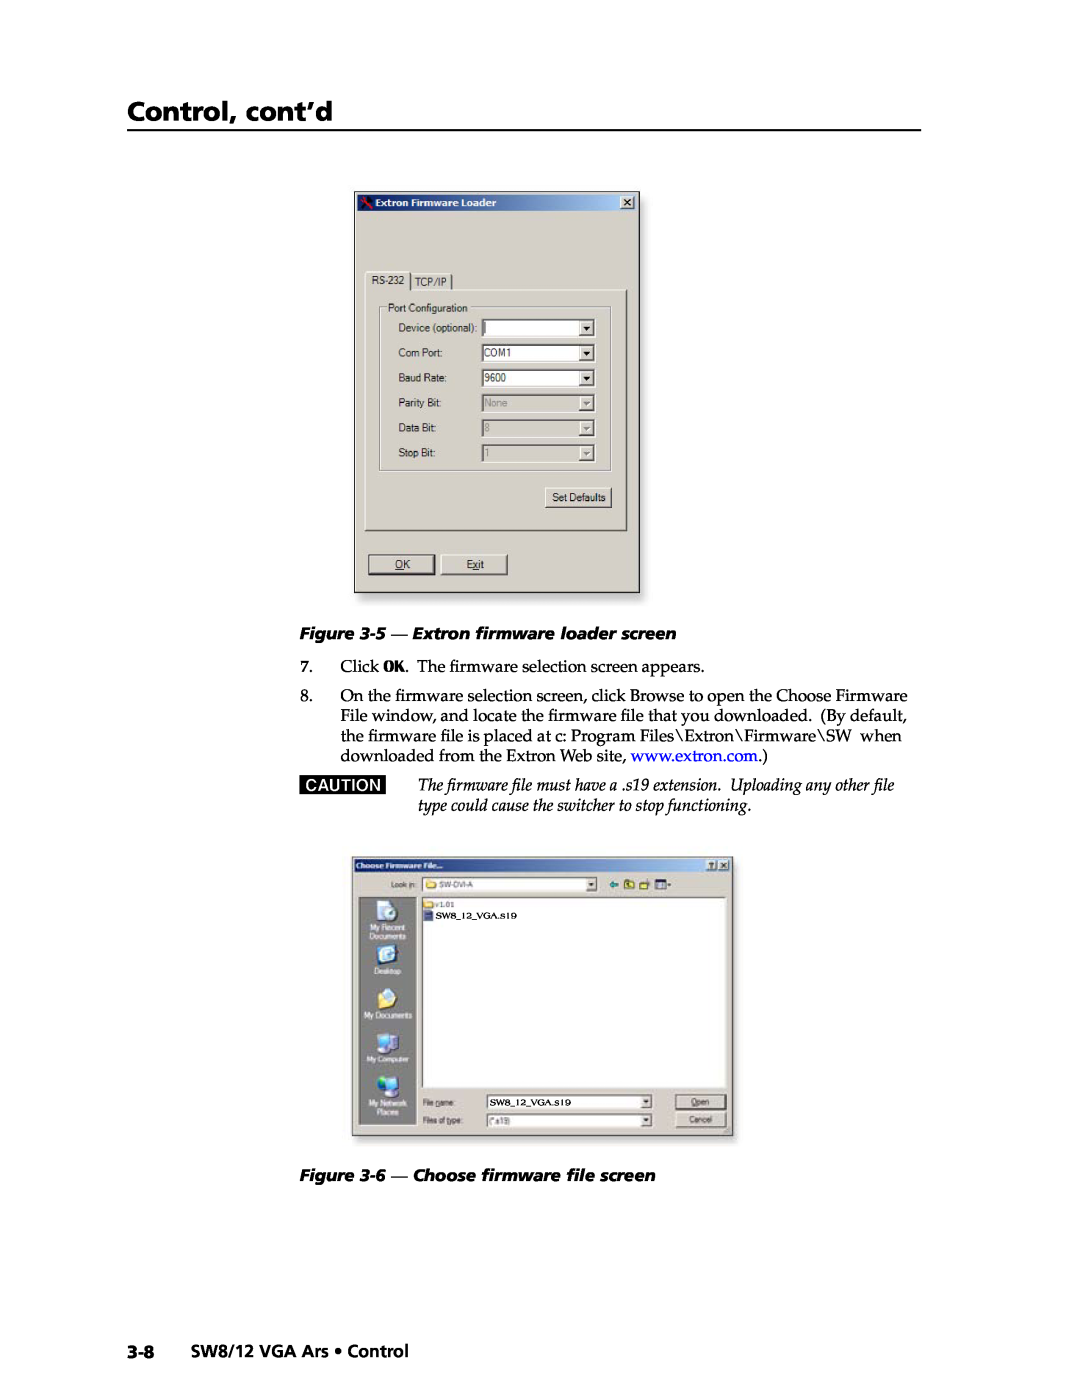 Extron electronic SW8/12 VGA manual 5 - Extron firmware loader screen, 6 - Choose firmware file screen, Control, cont’d 